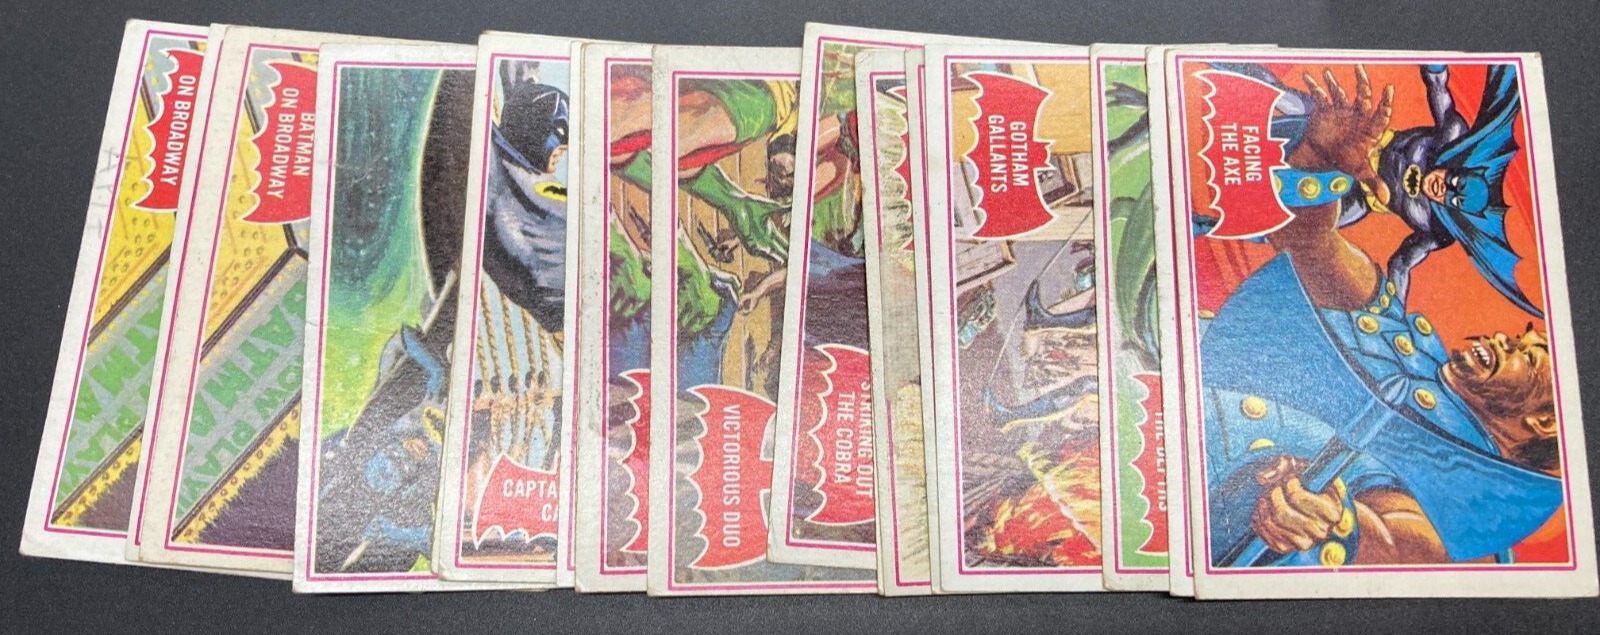 Topps 1966 Batman Red Bat Cards 18 card lot